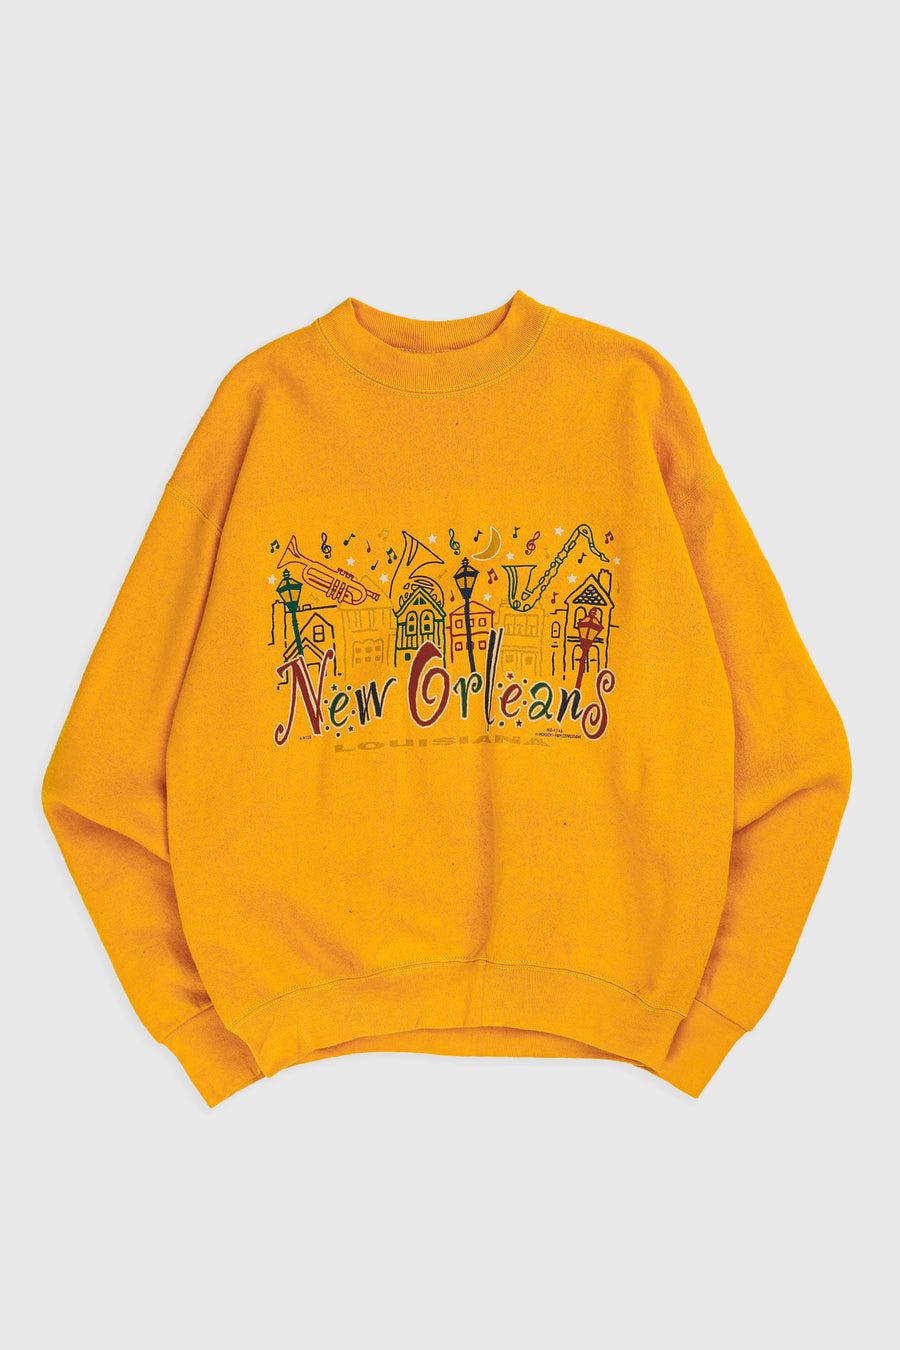 Vintage New Orleans Sweatshirt - M